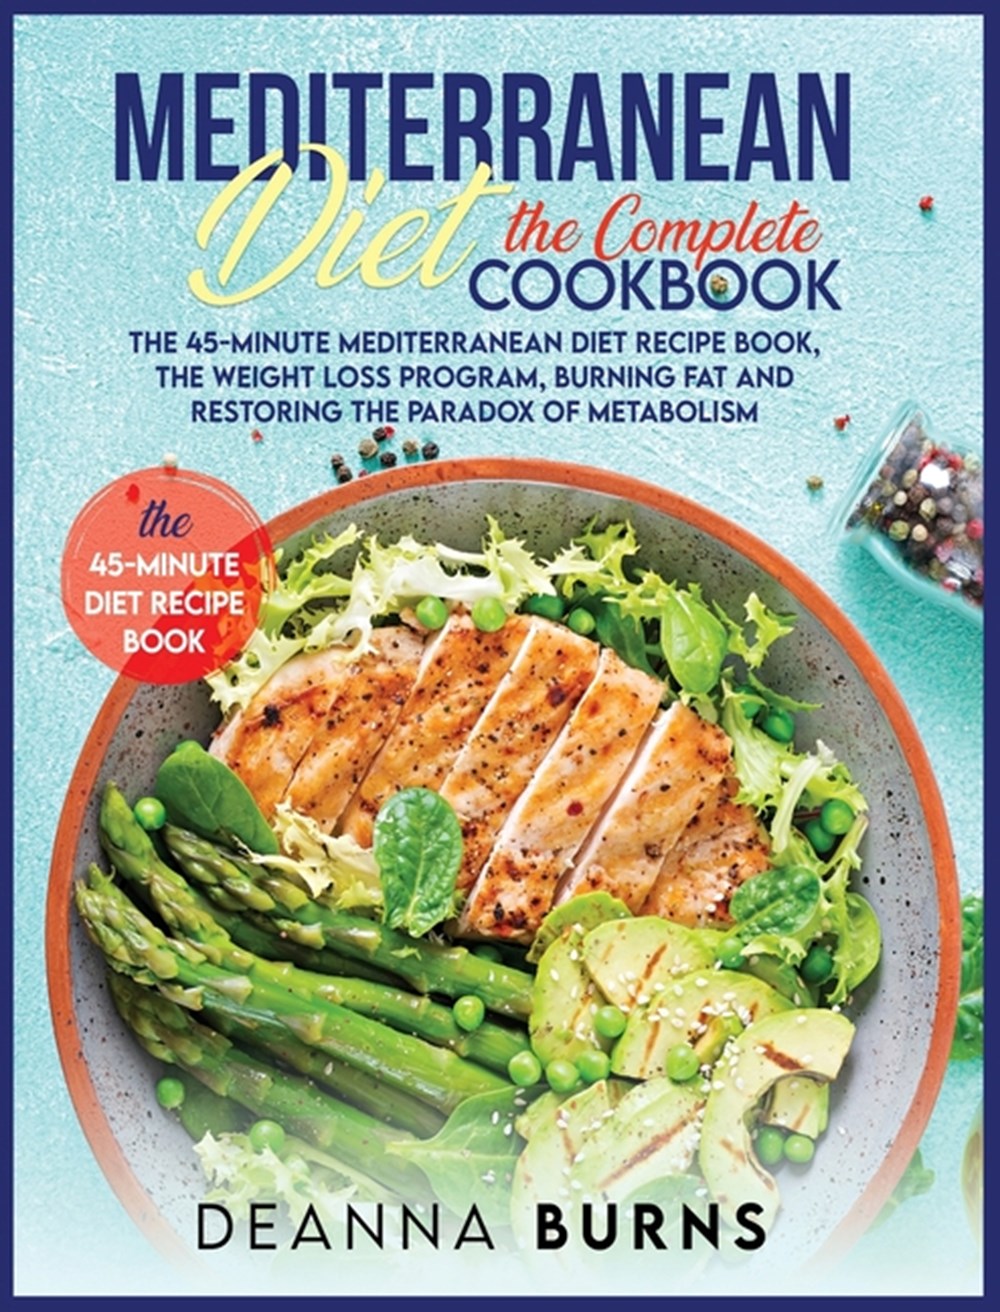 Buy Mediterranean Diet the Complete Cookbook: The 45-Minute